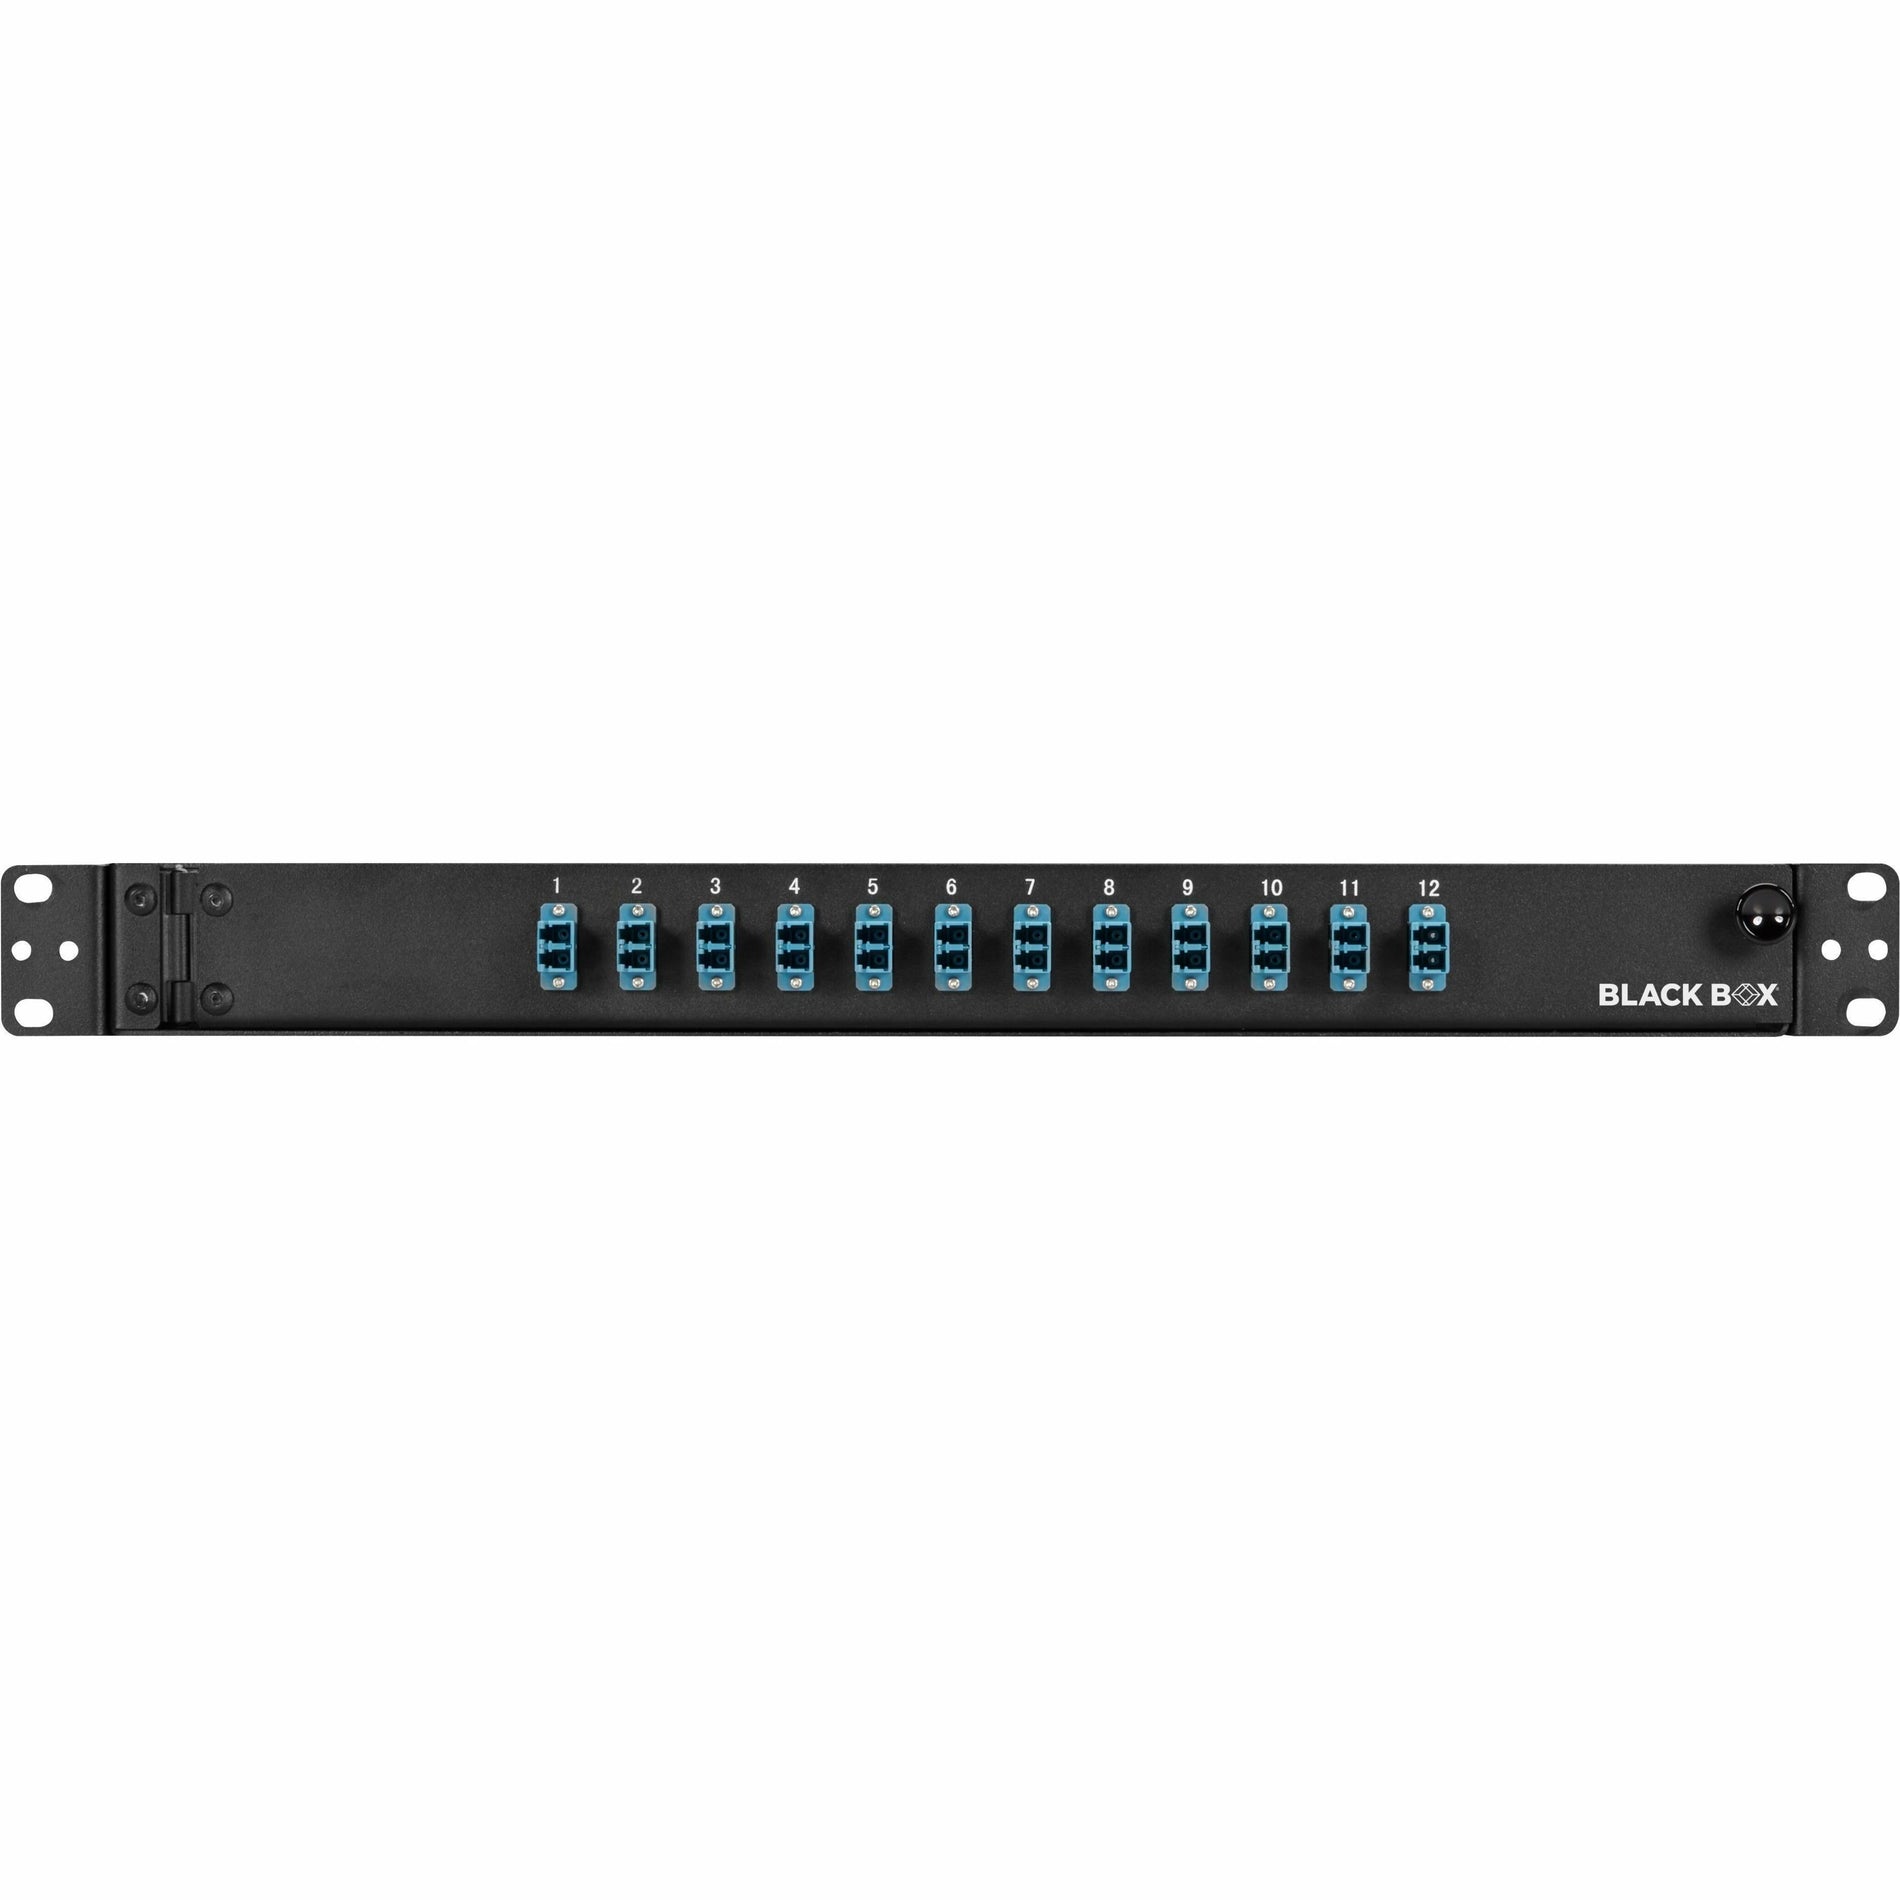 Black Box JPM380A-R2 Rackmount Duplex Fiber Enclosure - 1U, Preloaded Patch Panel